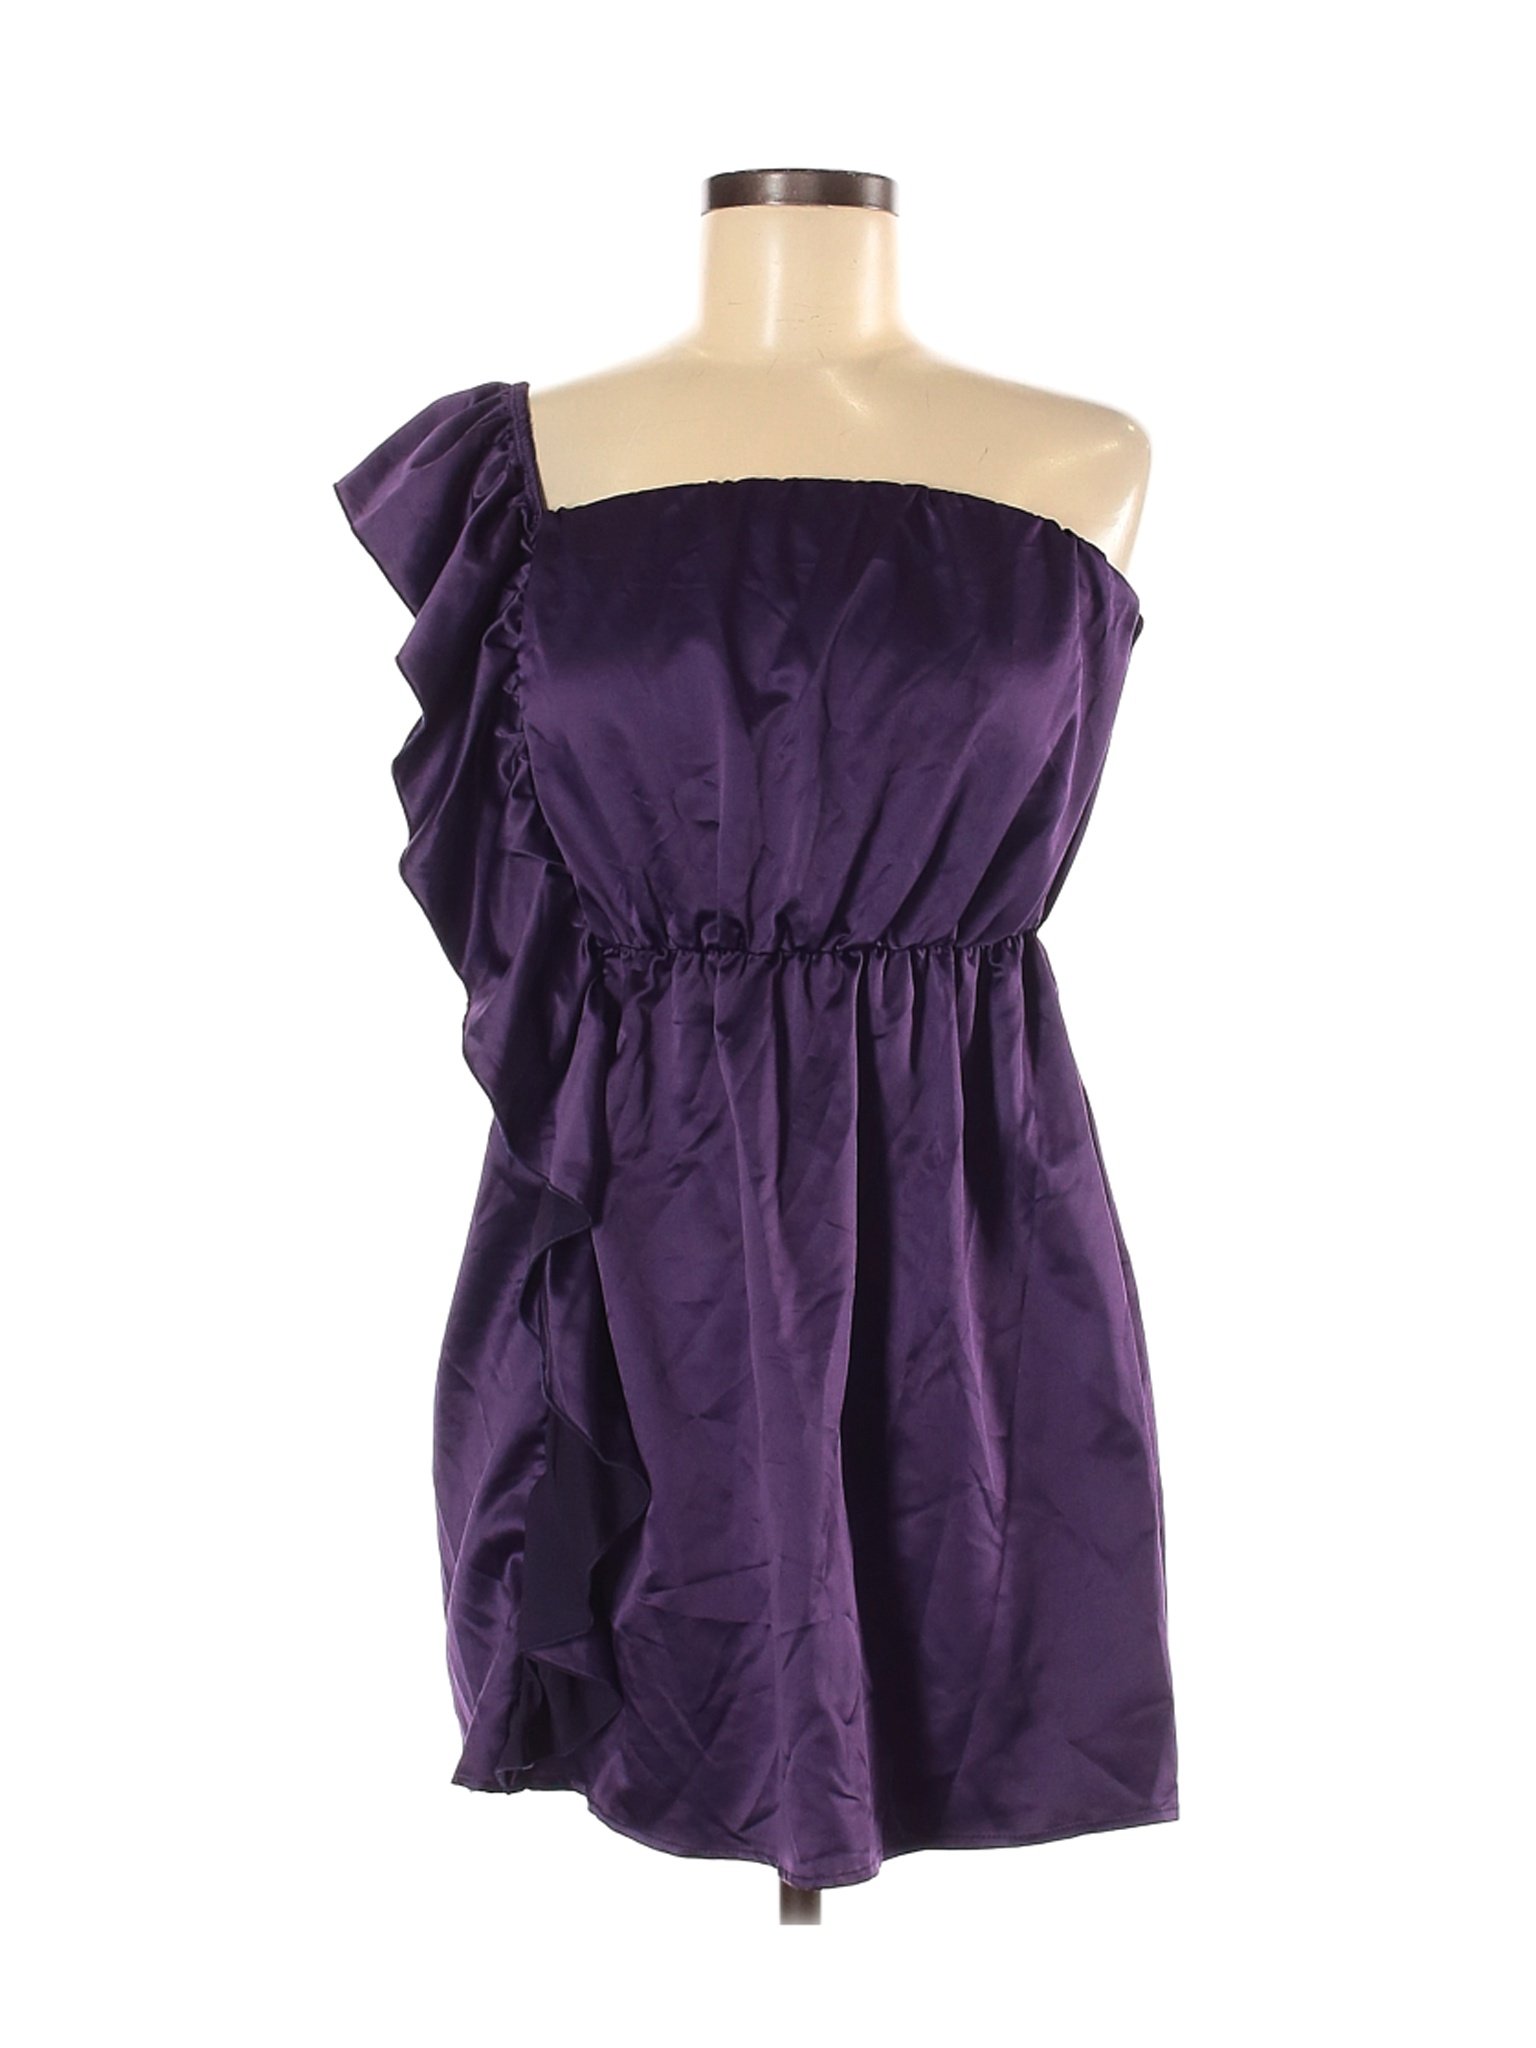 NWT Wet Seal Women Purple Cocktail Dress M | eBay